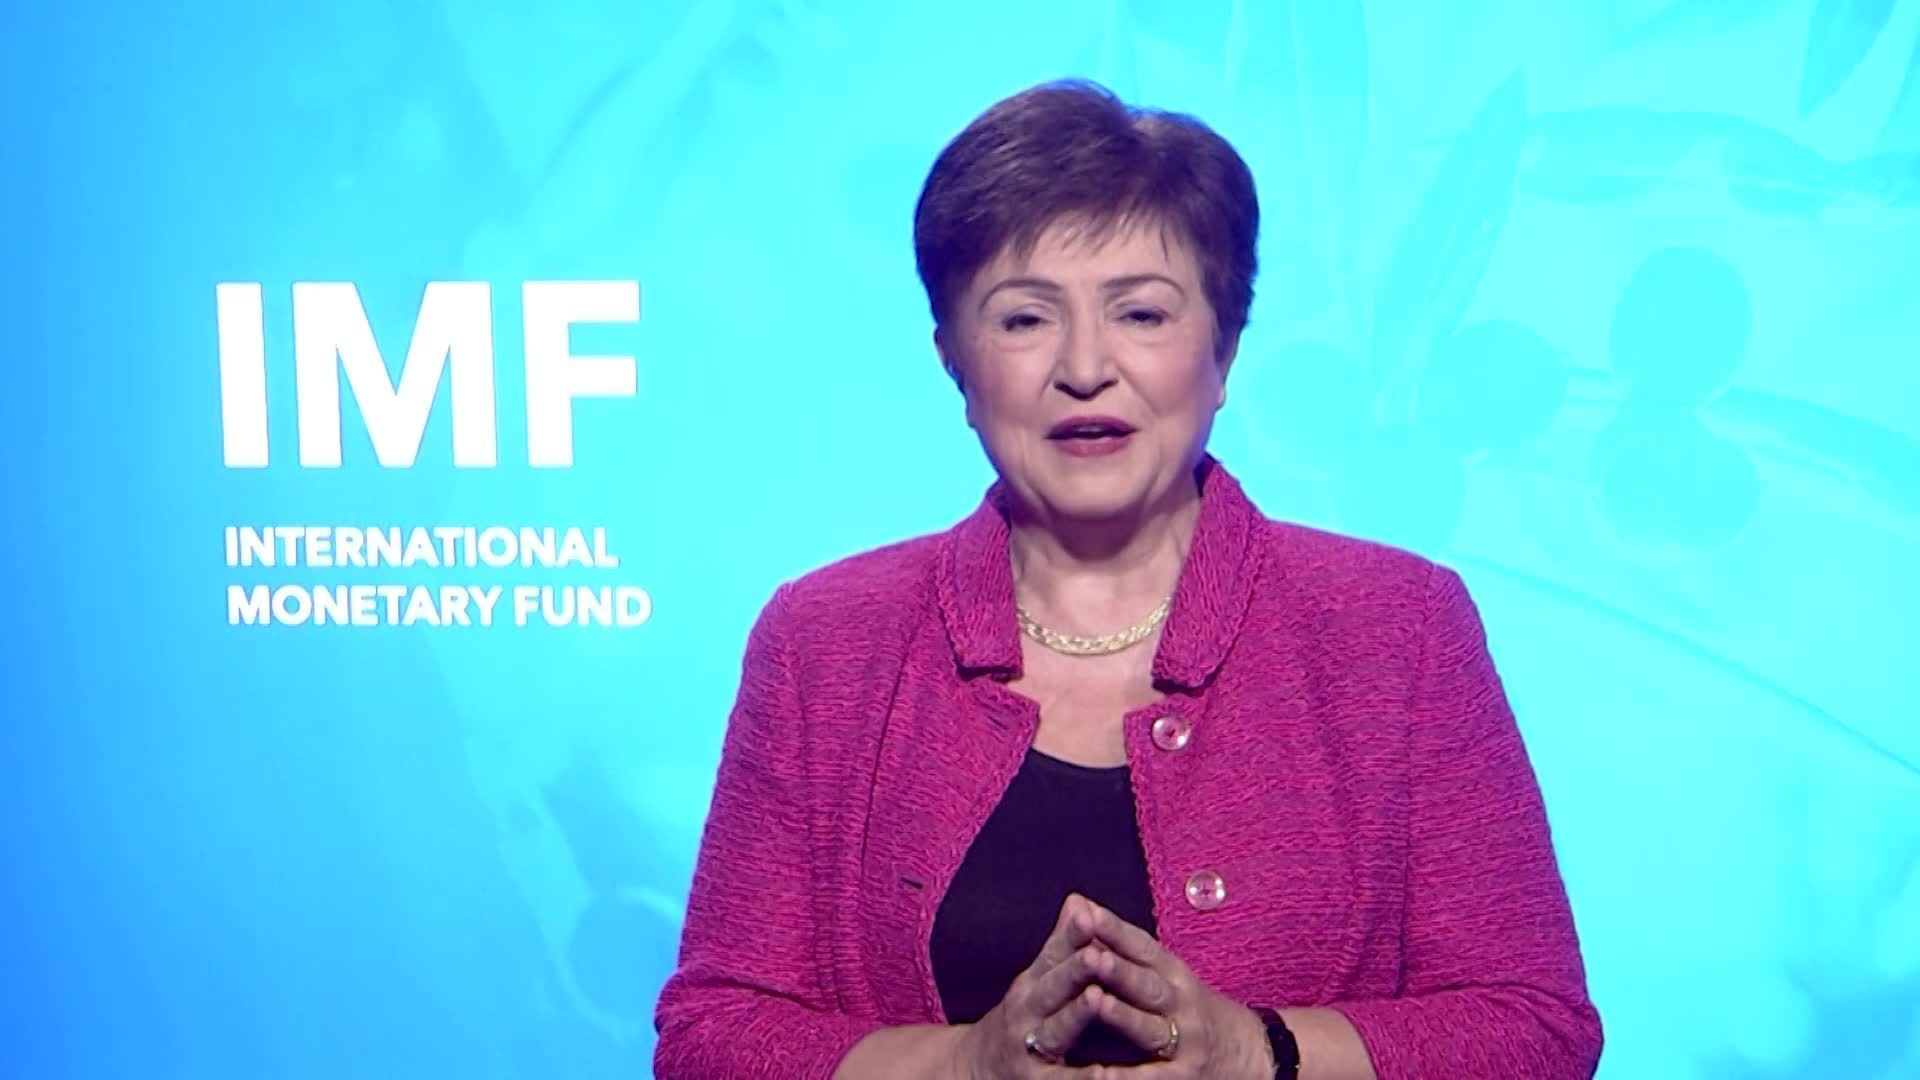 IMF / Kristalina Georgieva’s Remarks at the Singapore Fintech Festival